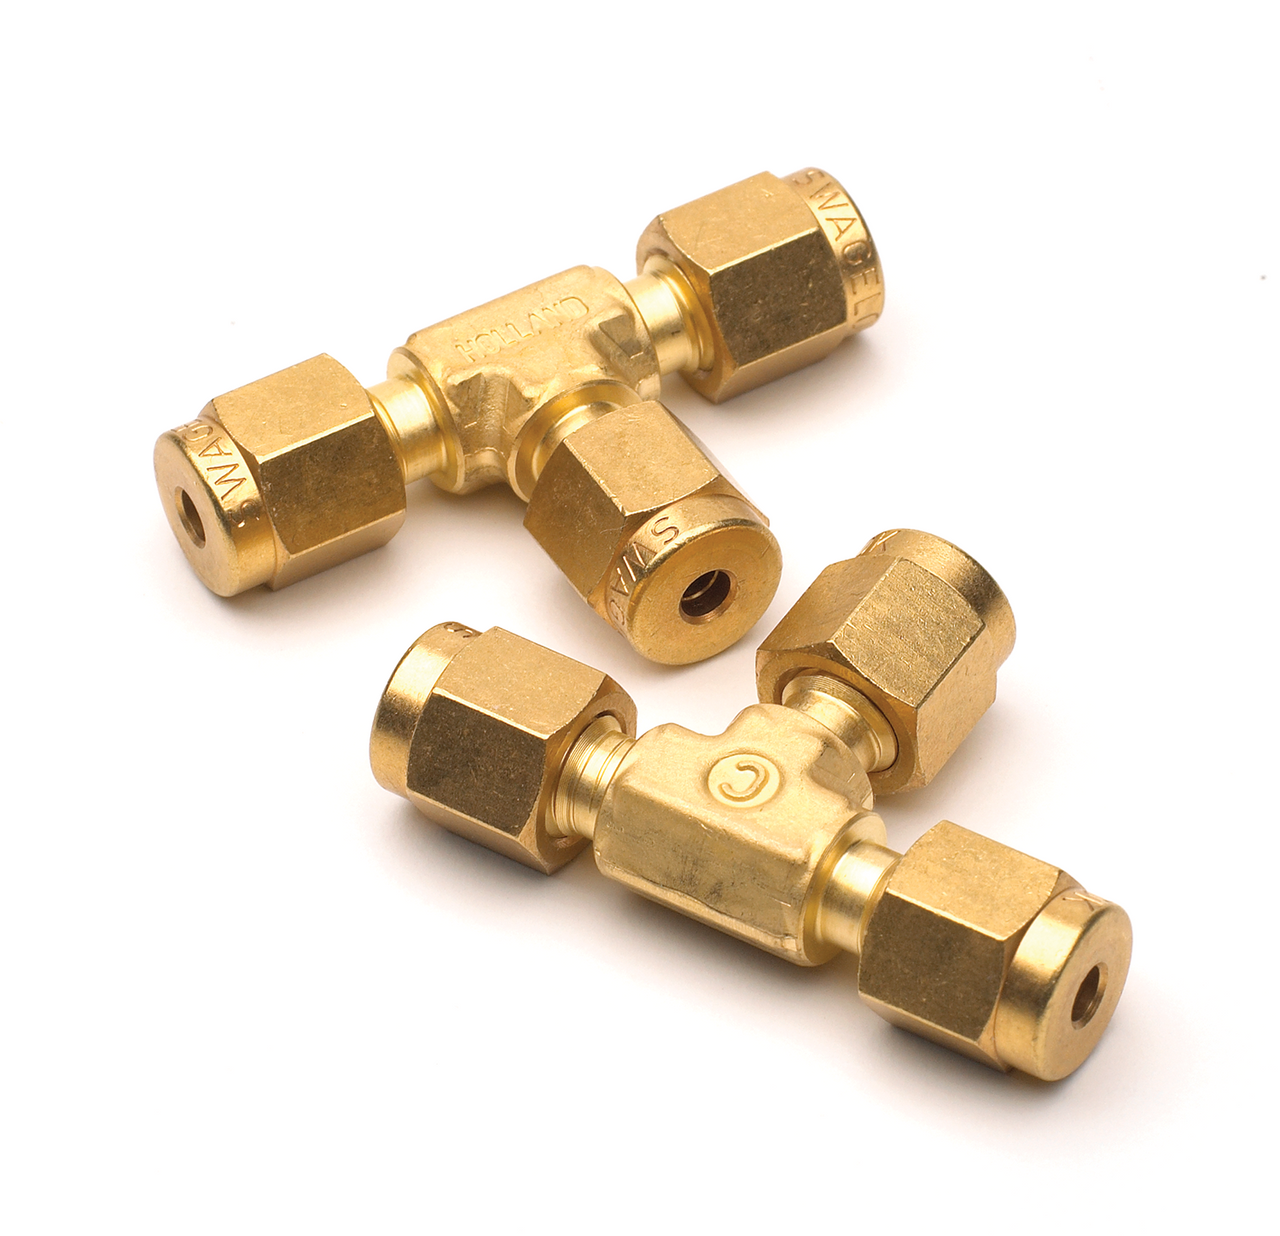 5180-4160 - Tee, 1/8 Brass Union 2/PK - Chrom Tech, Inc.